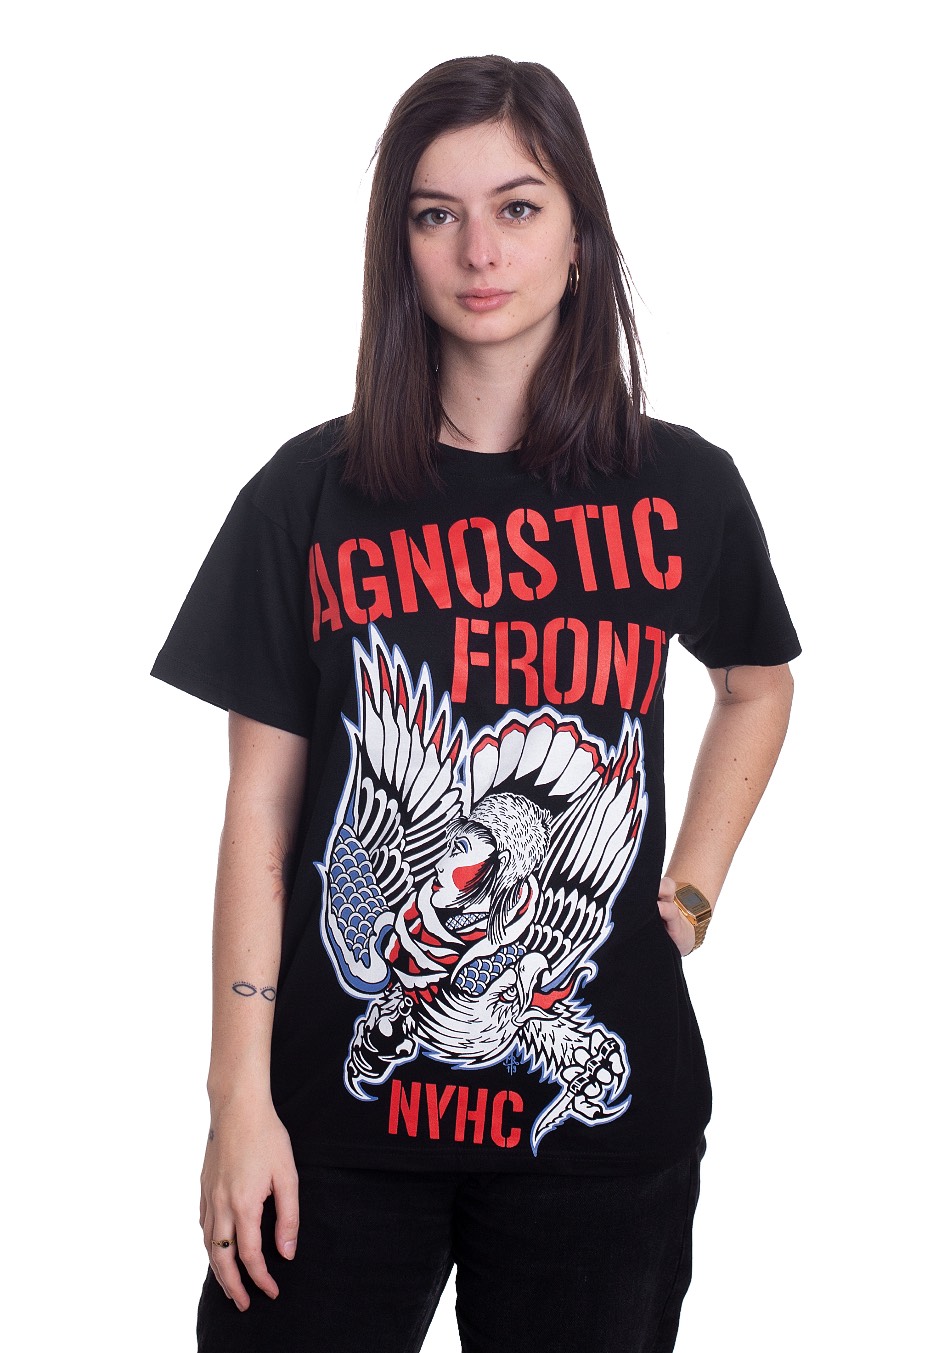 Agnostic Front - Eagle Girl - - T-Shirts